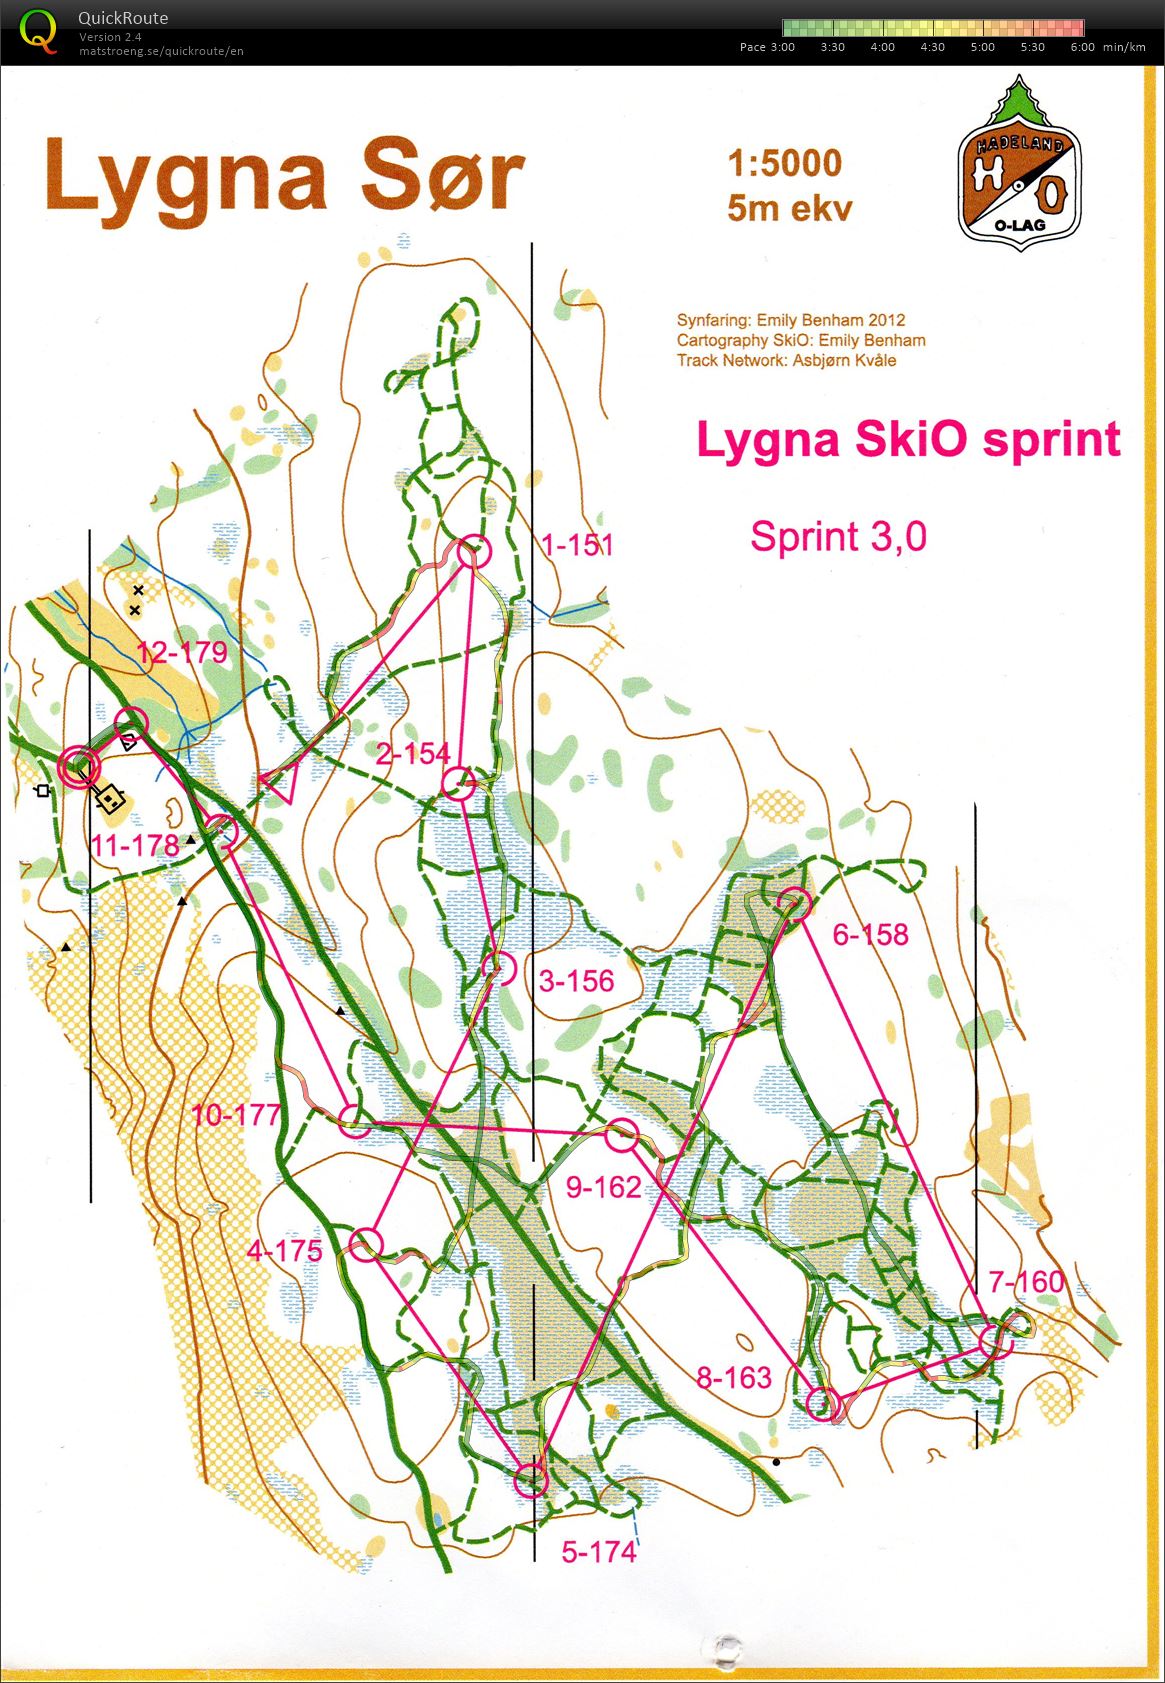 Lygna NC sr ski-o sprint (2015-01-03)